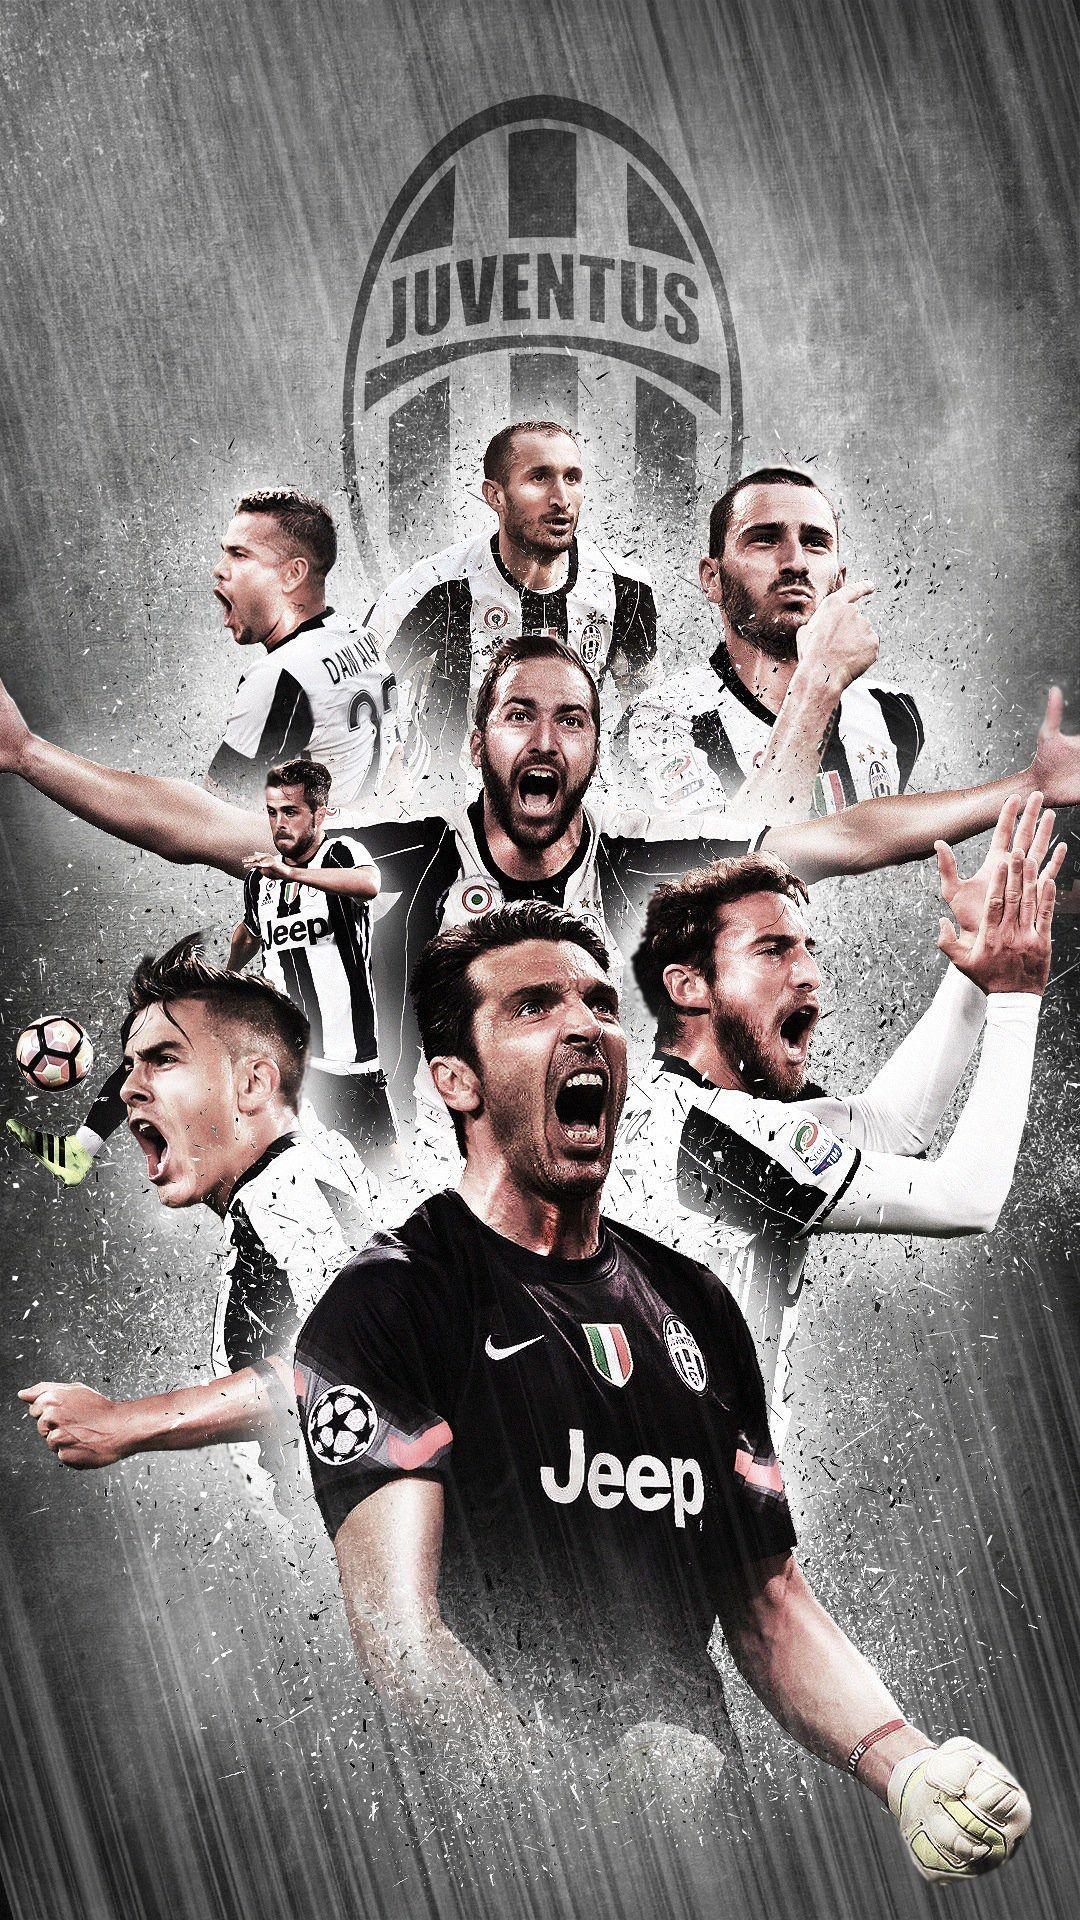 Download Juventus Die-Hard Supporters At Stadium Wallpaper | Wallpapers.com